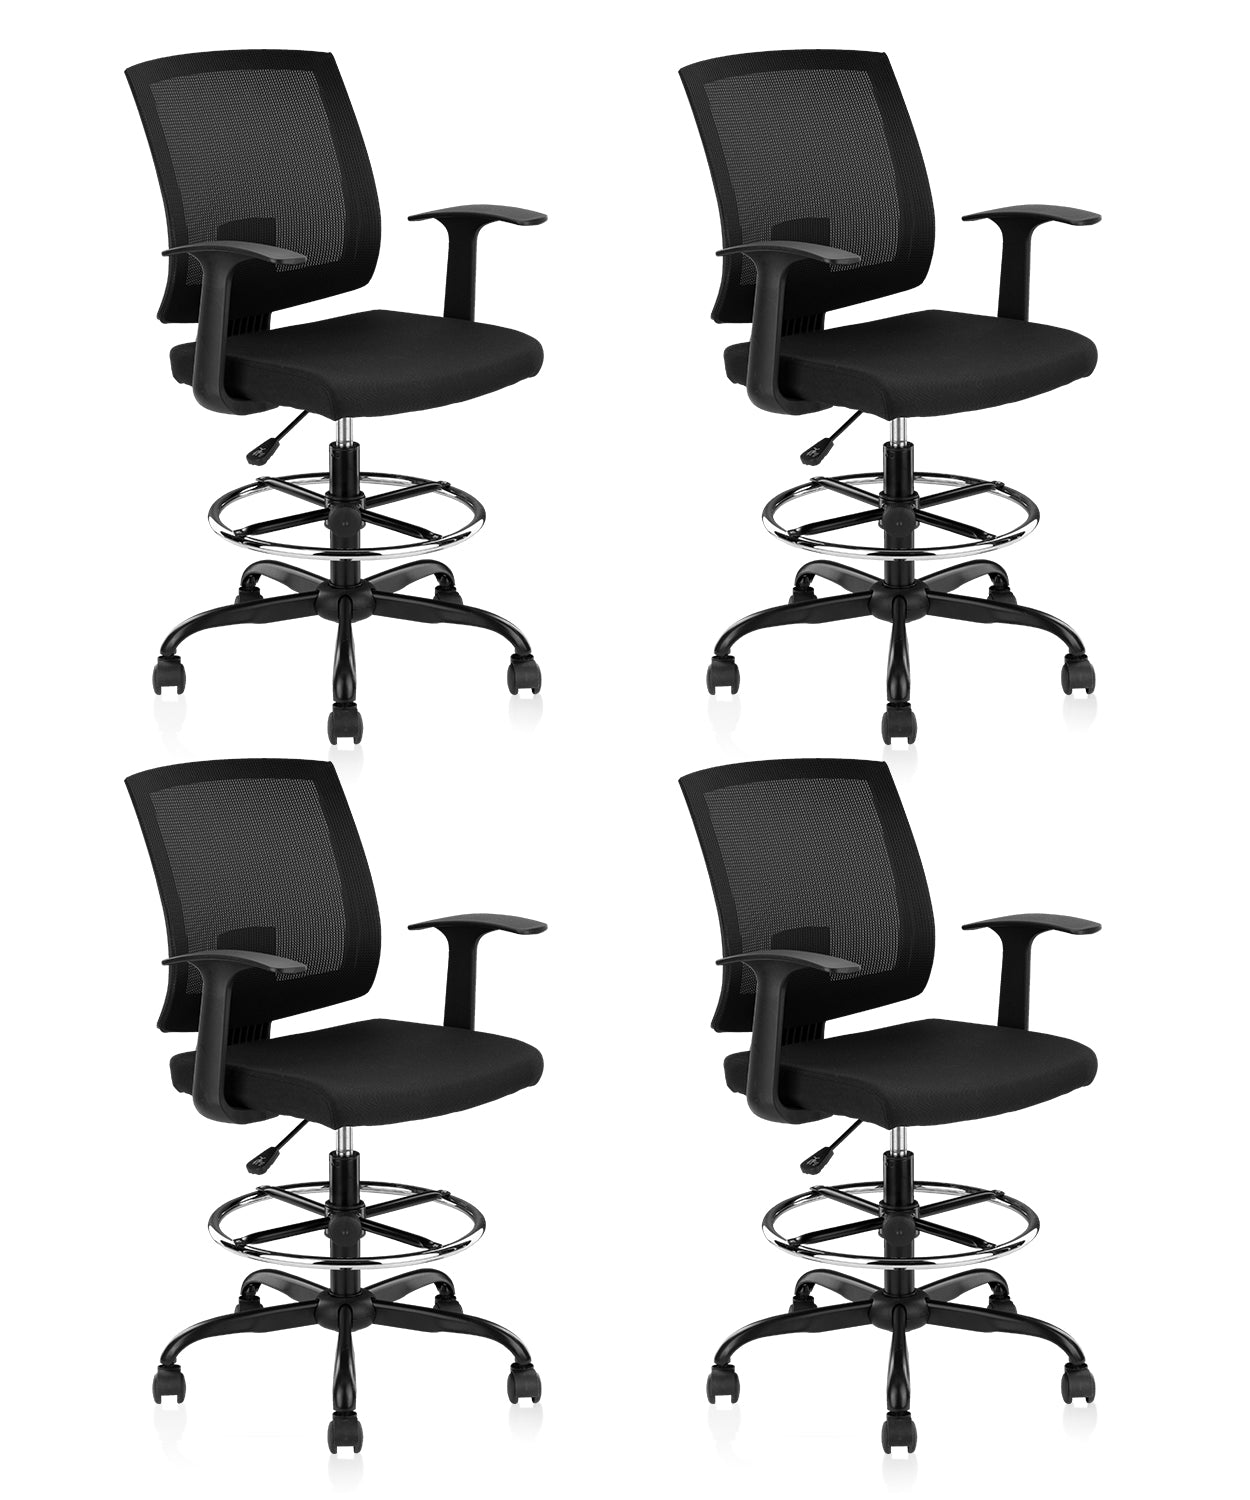 CLATINA Ergonomic Mesh Office Chair High Back Computer Desk Chair